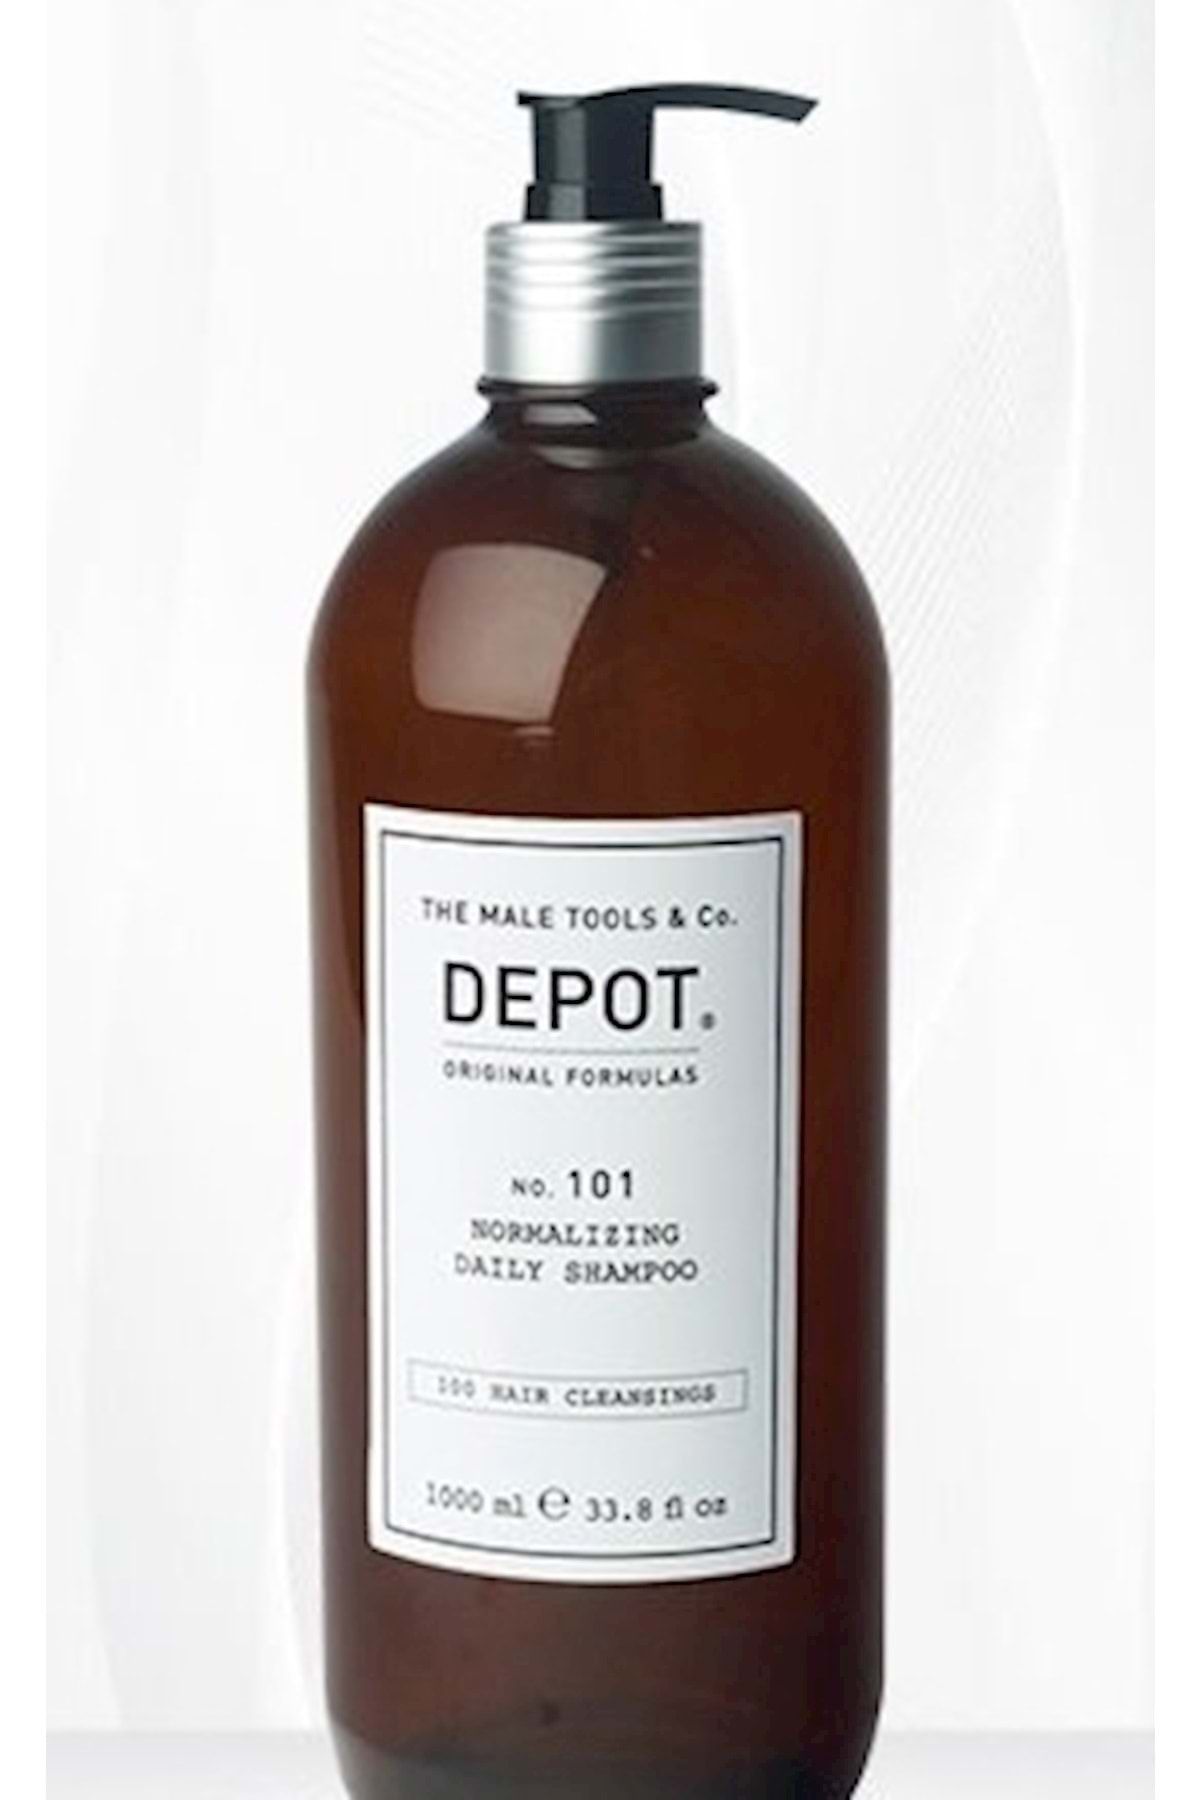 DEPOT No. 101 Normalizing Günlük Şampuan 1000 ml